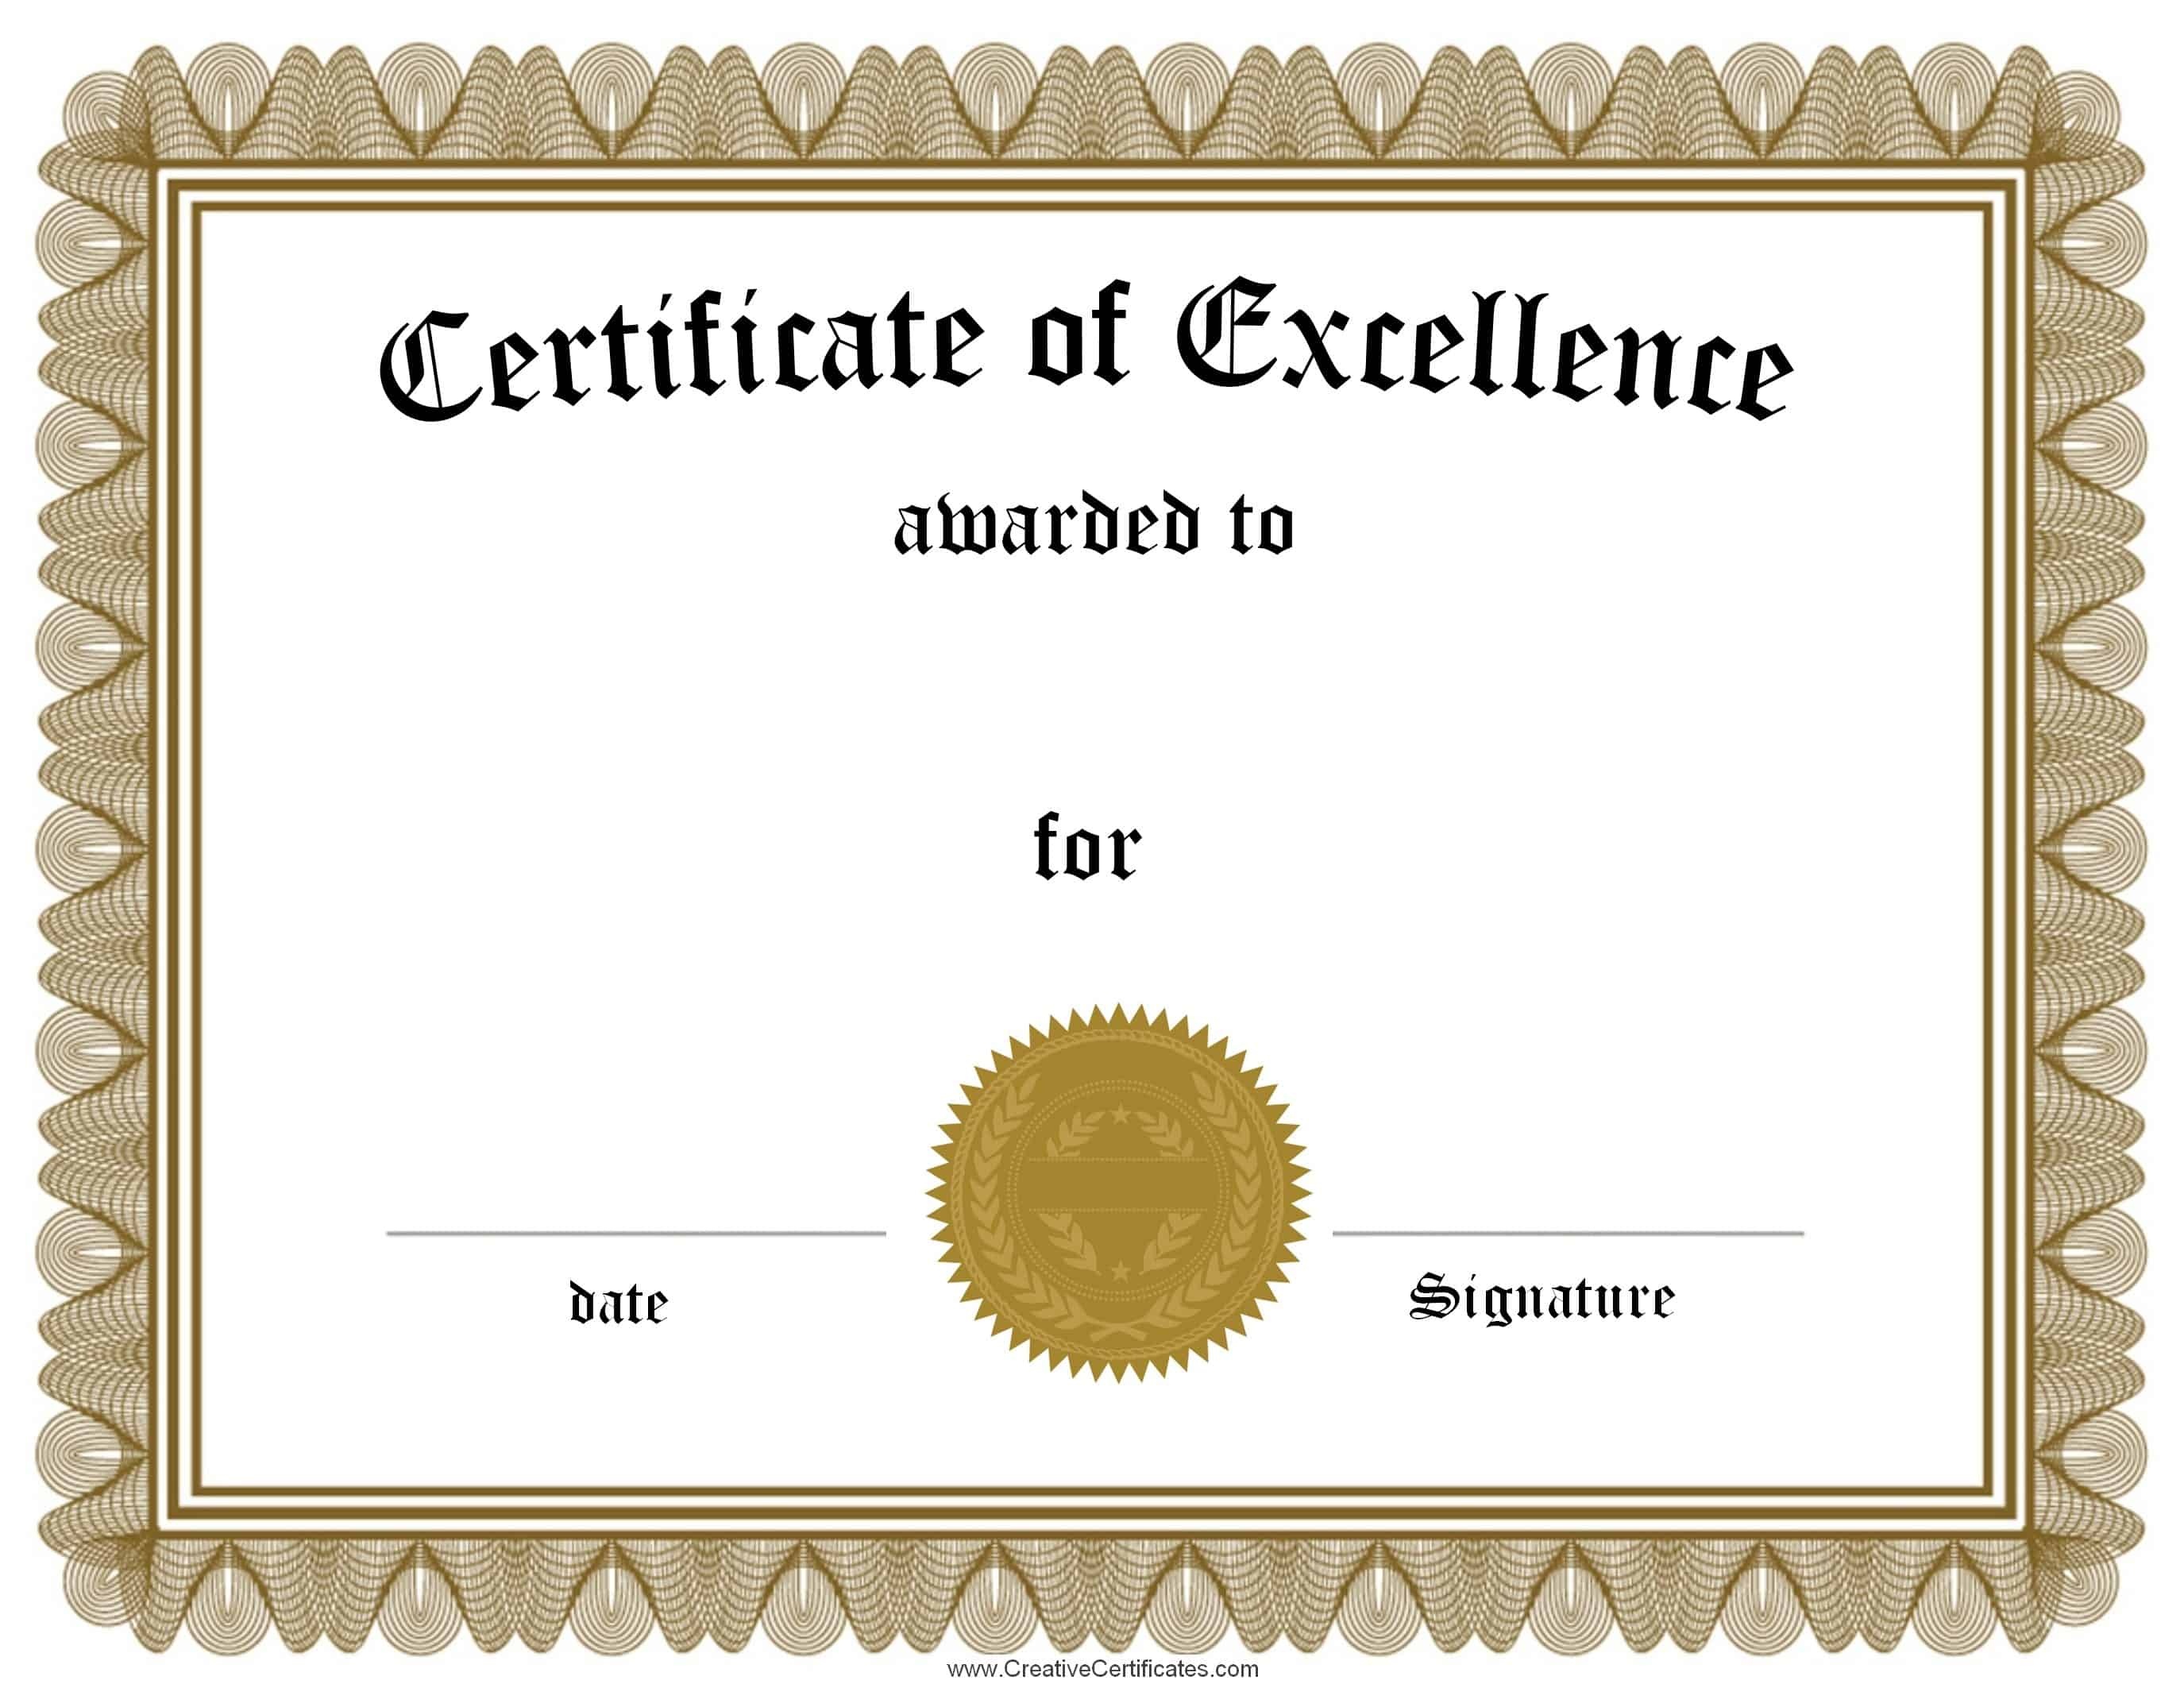 Free Customizable Certificate Of Achievement - Free Printable Certificates Of Accomplishment